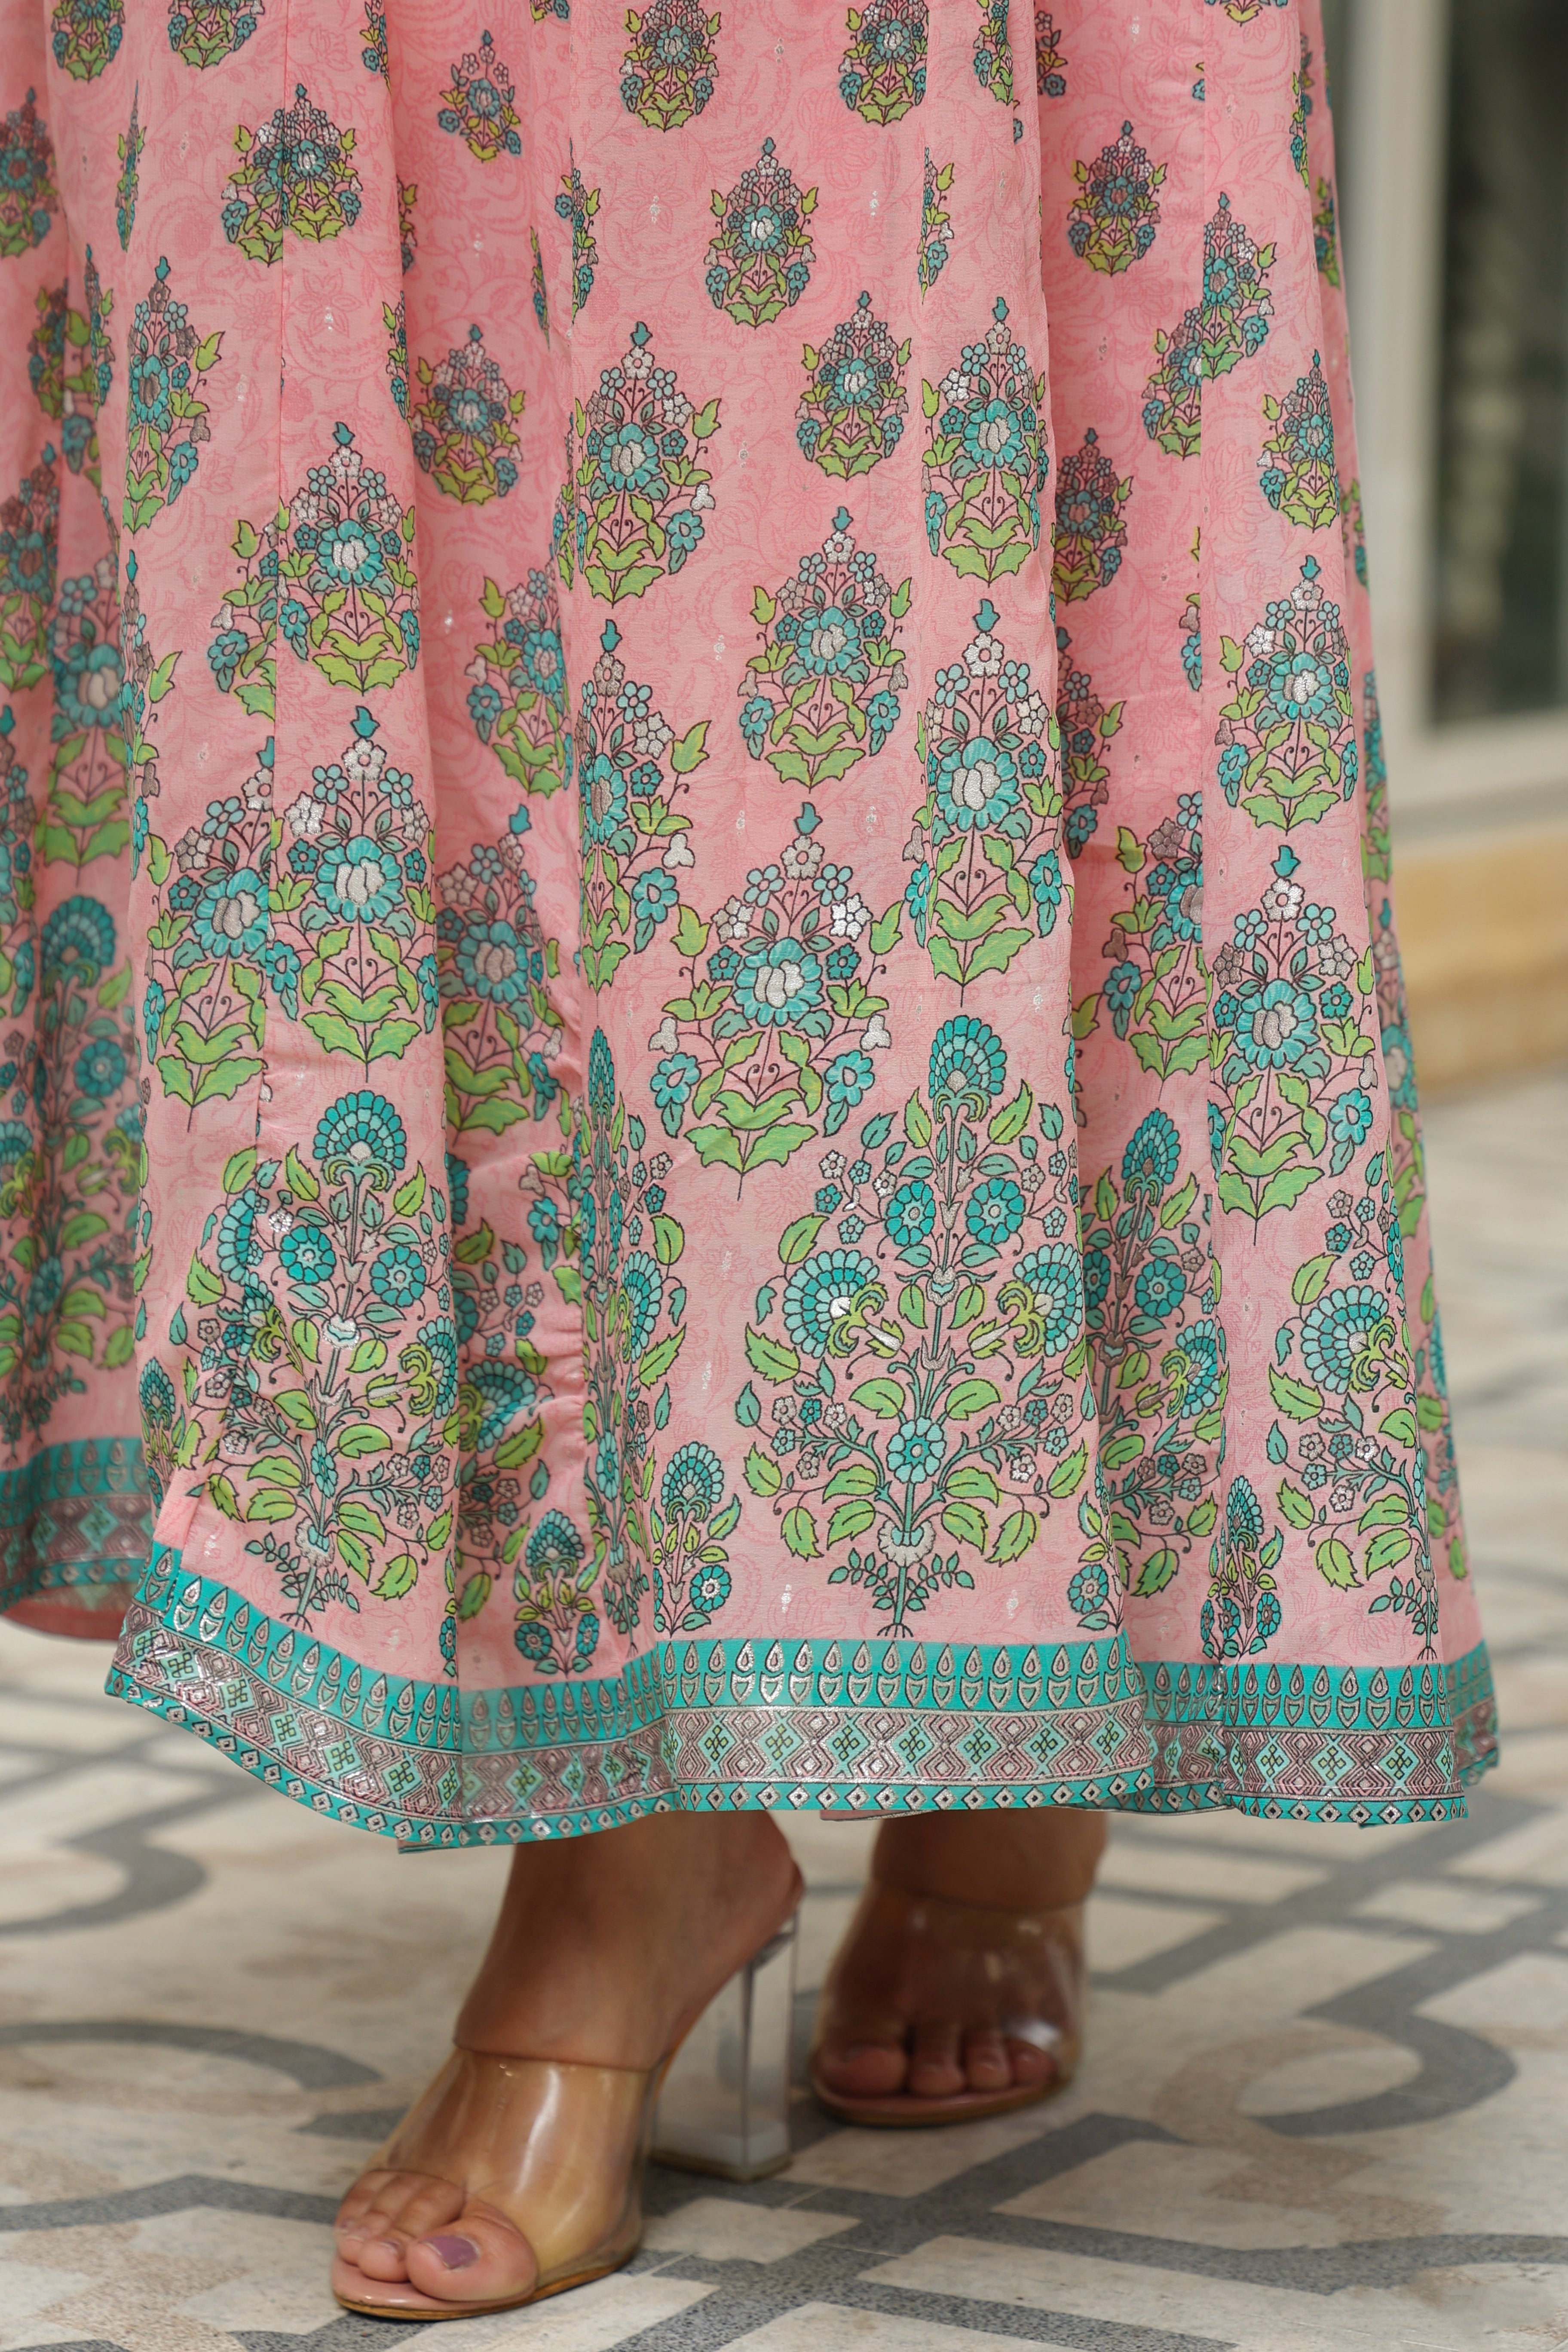 Buy Pink Georgette Printed Flared Dress Online in India